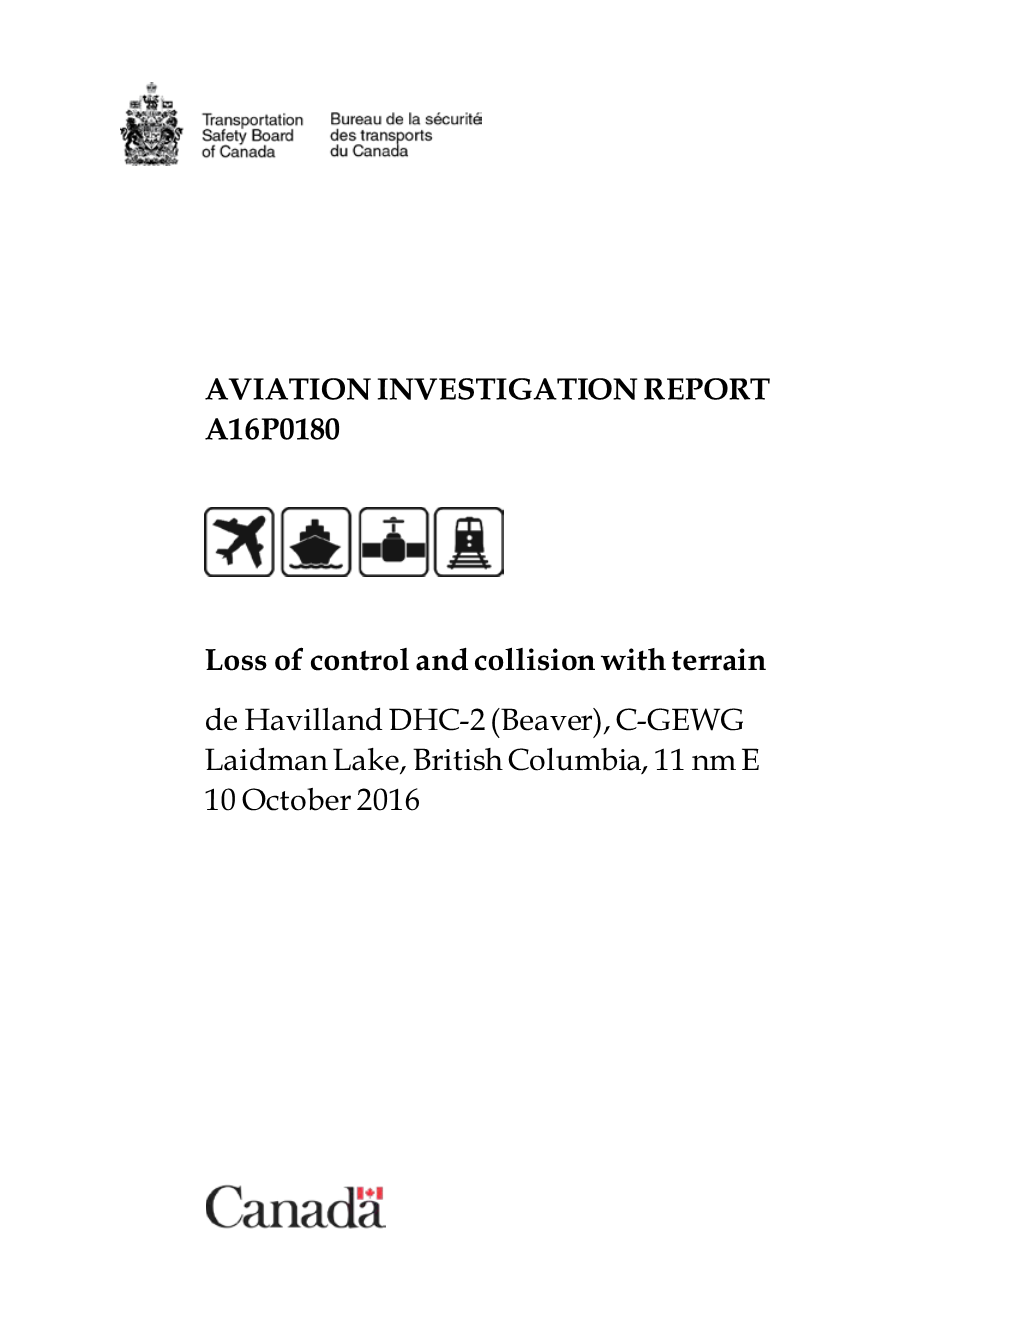 Aviation Investigation Report A16p0180